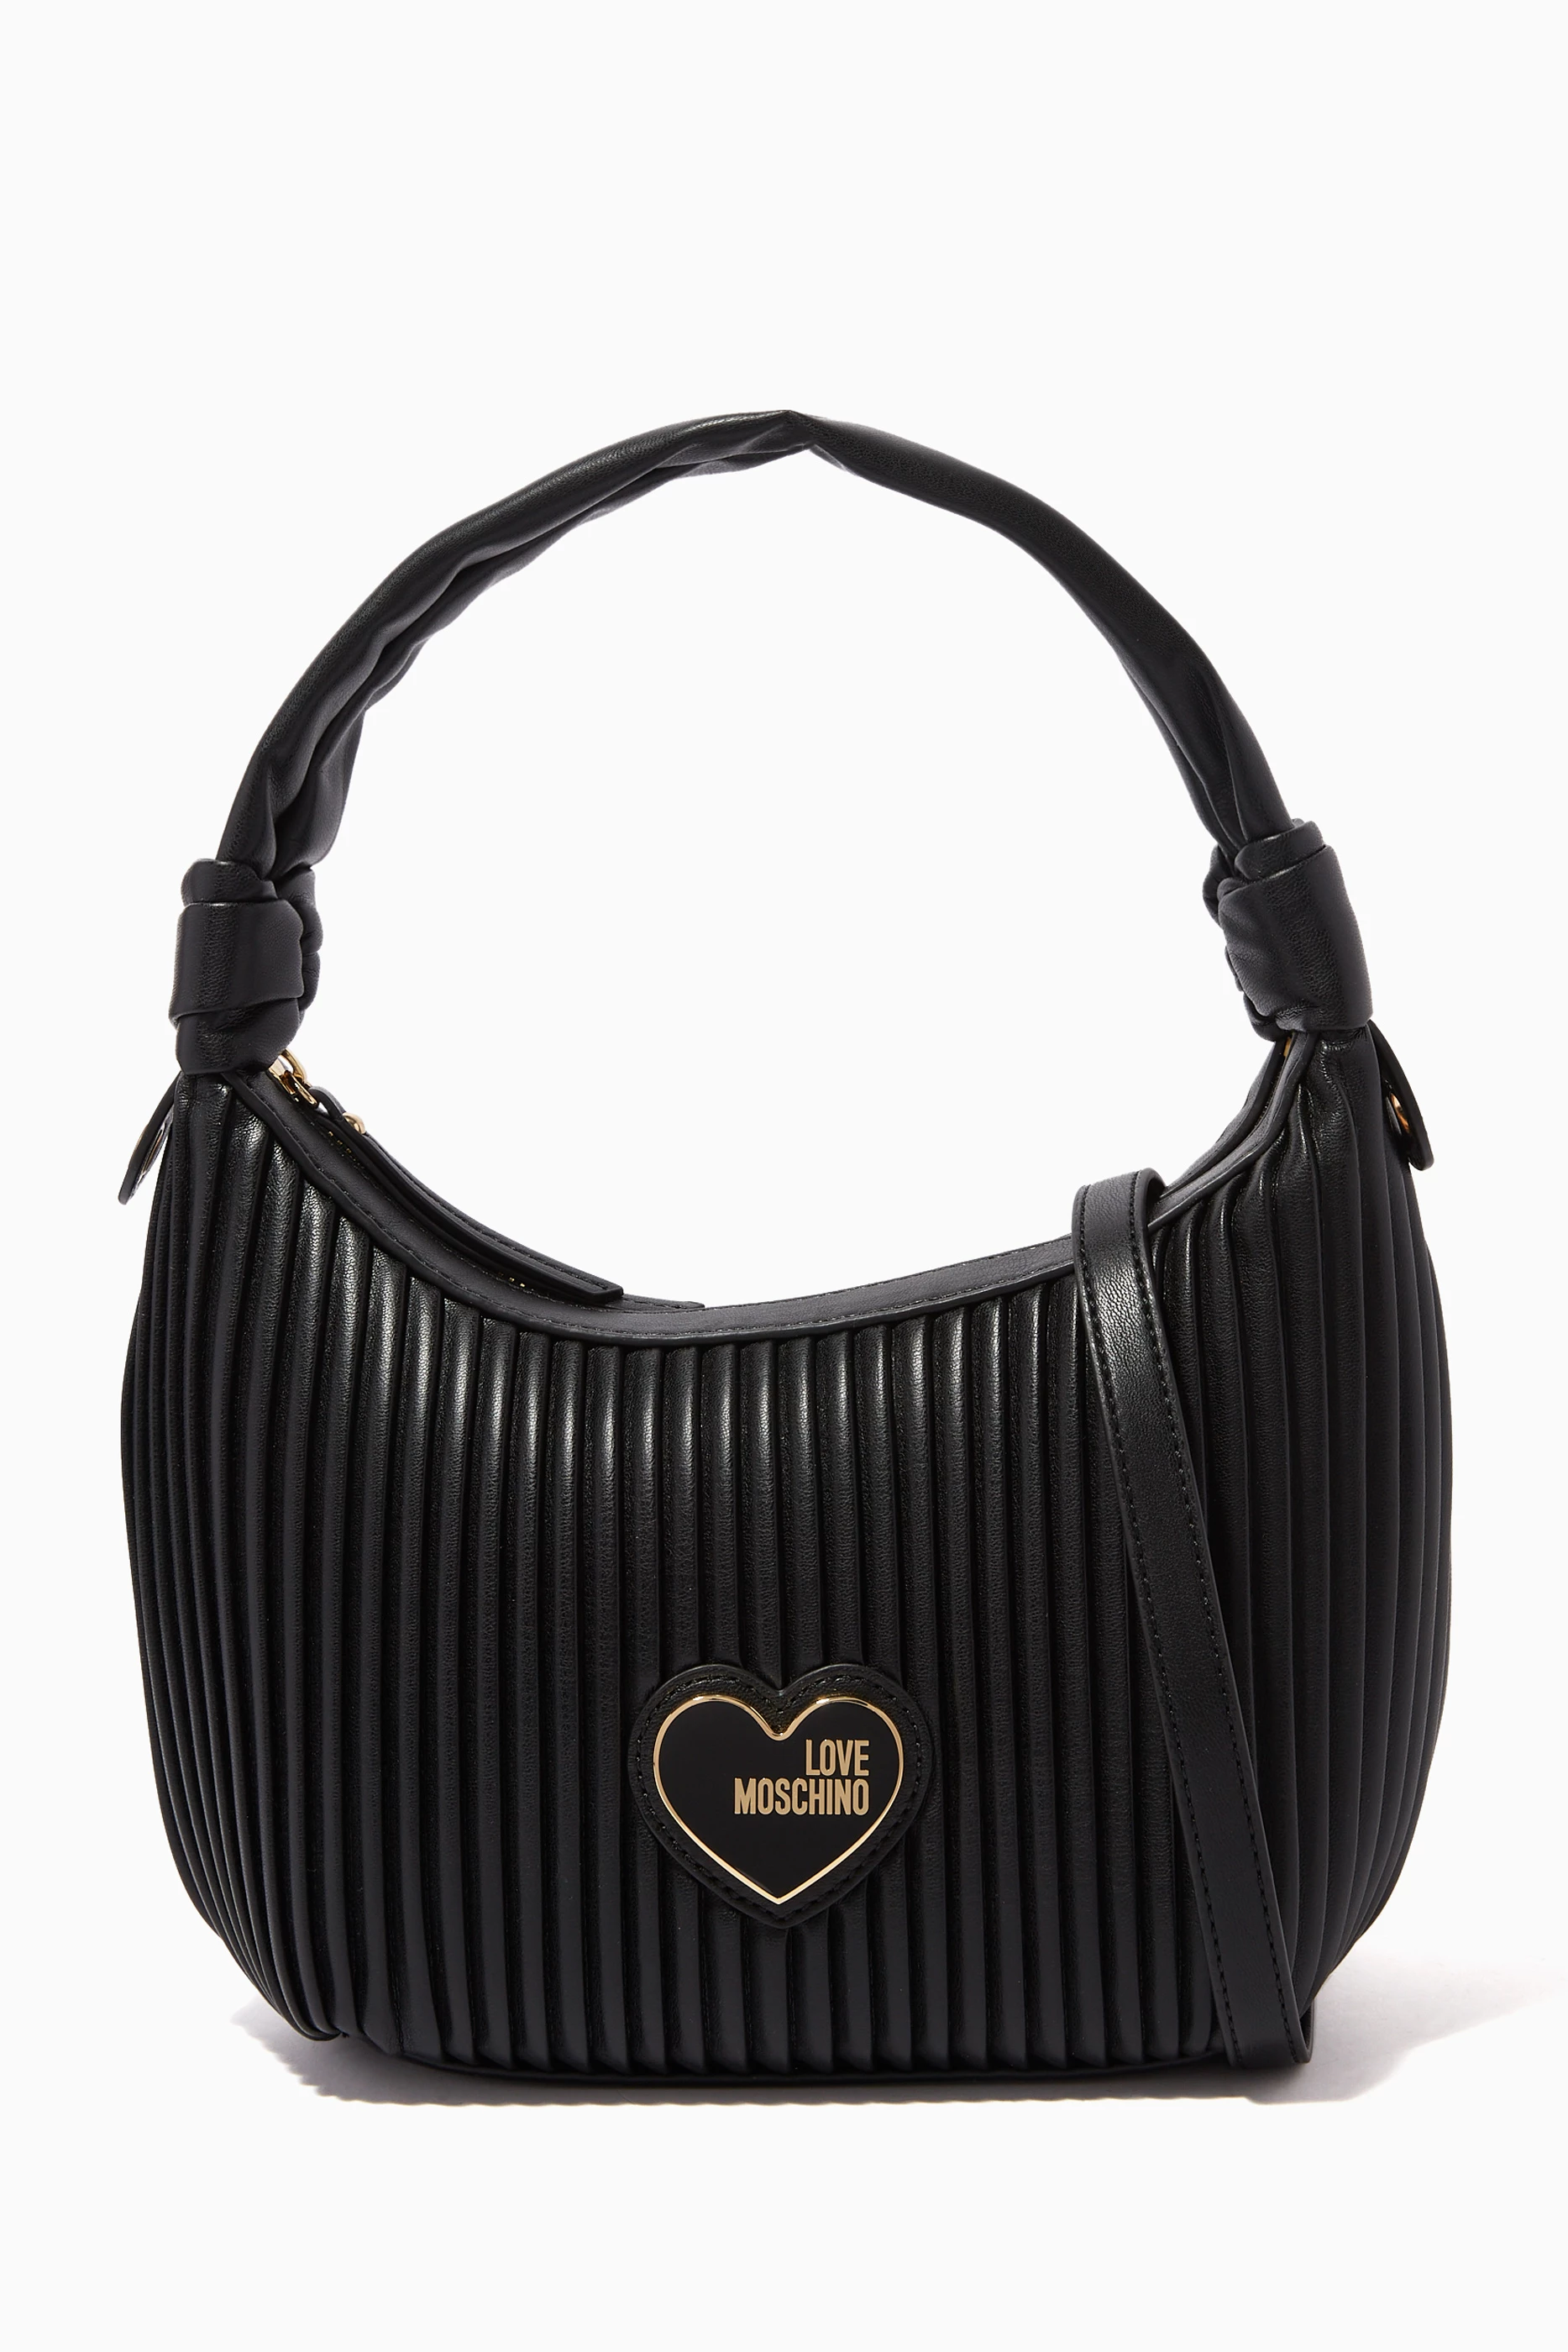 Moschino Black Lace Bustier Shoulder Bag – Treasures of NYC